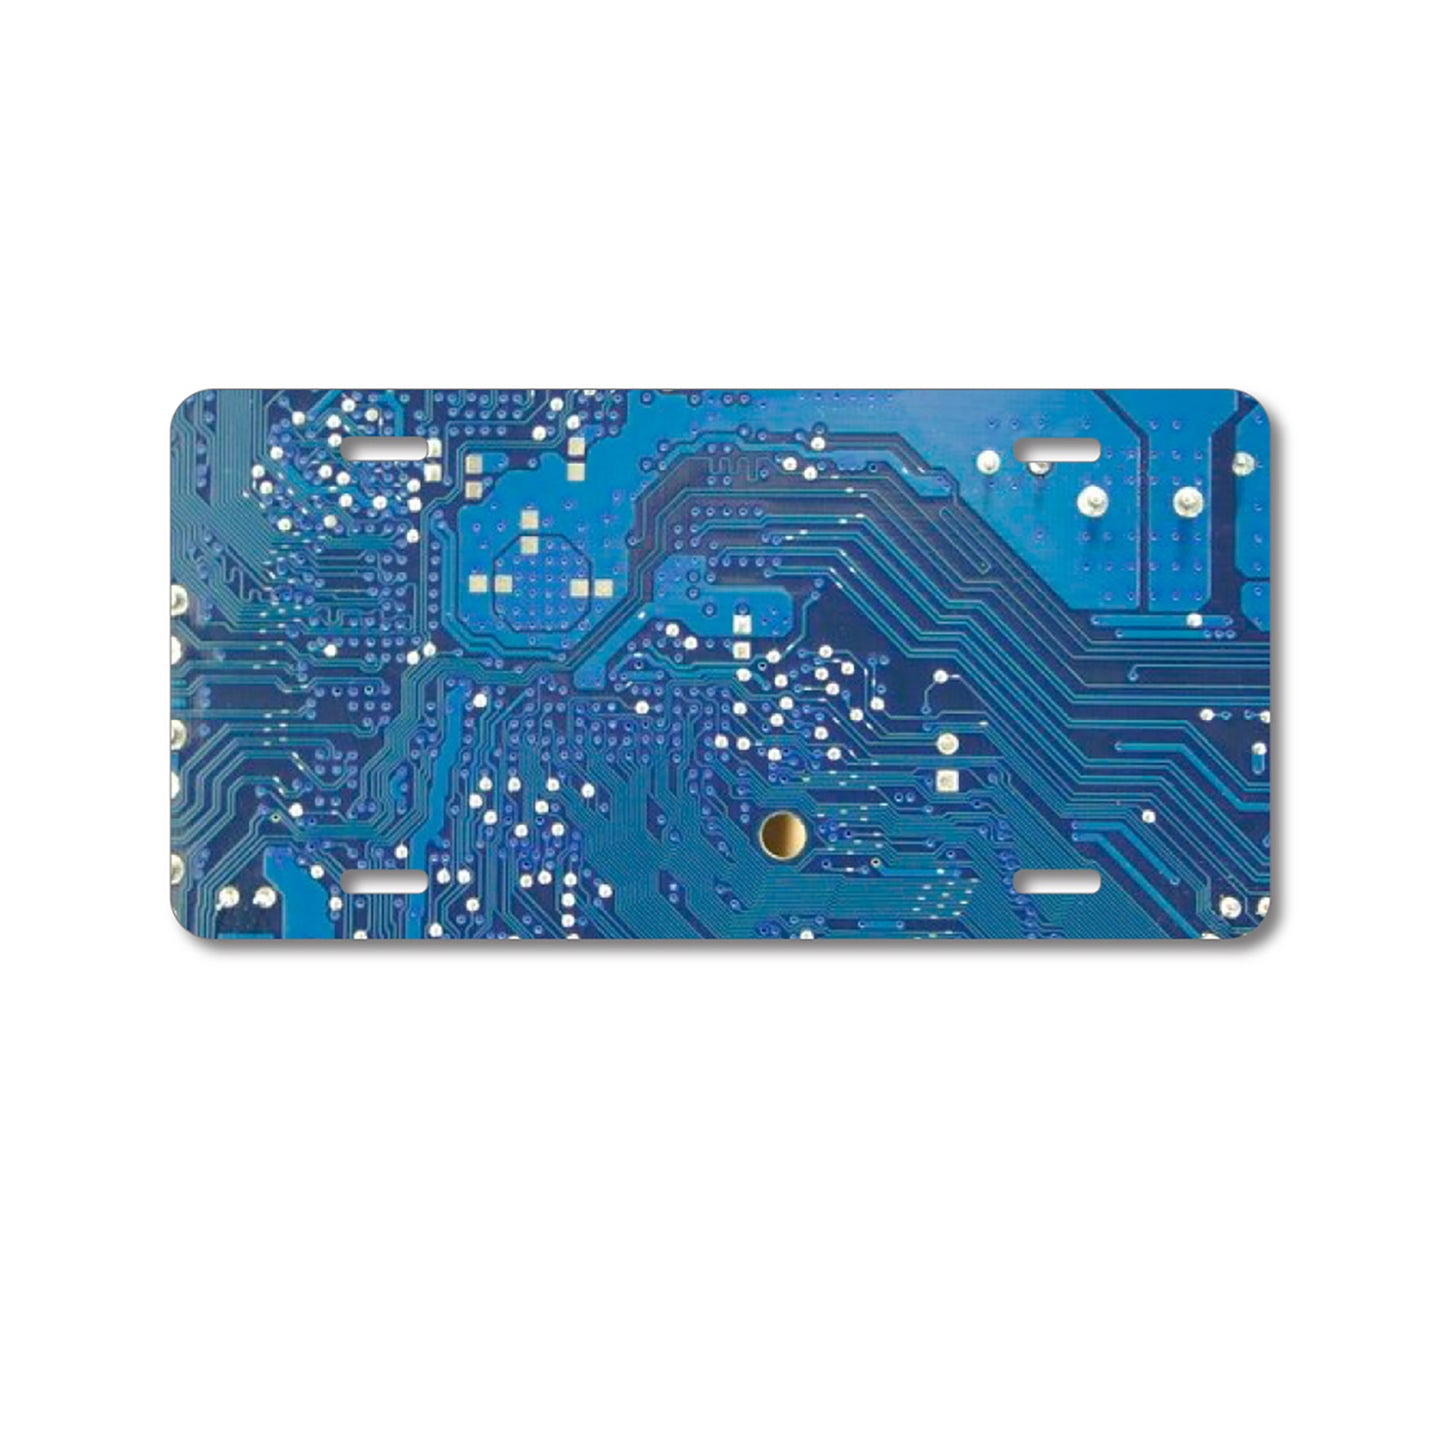 DistinctInk Custom Aluminum Decorative Vanity Front License Plate - Blue Circuit Board